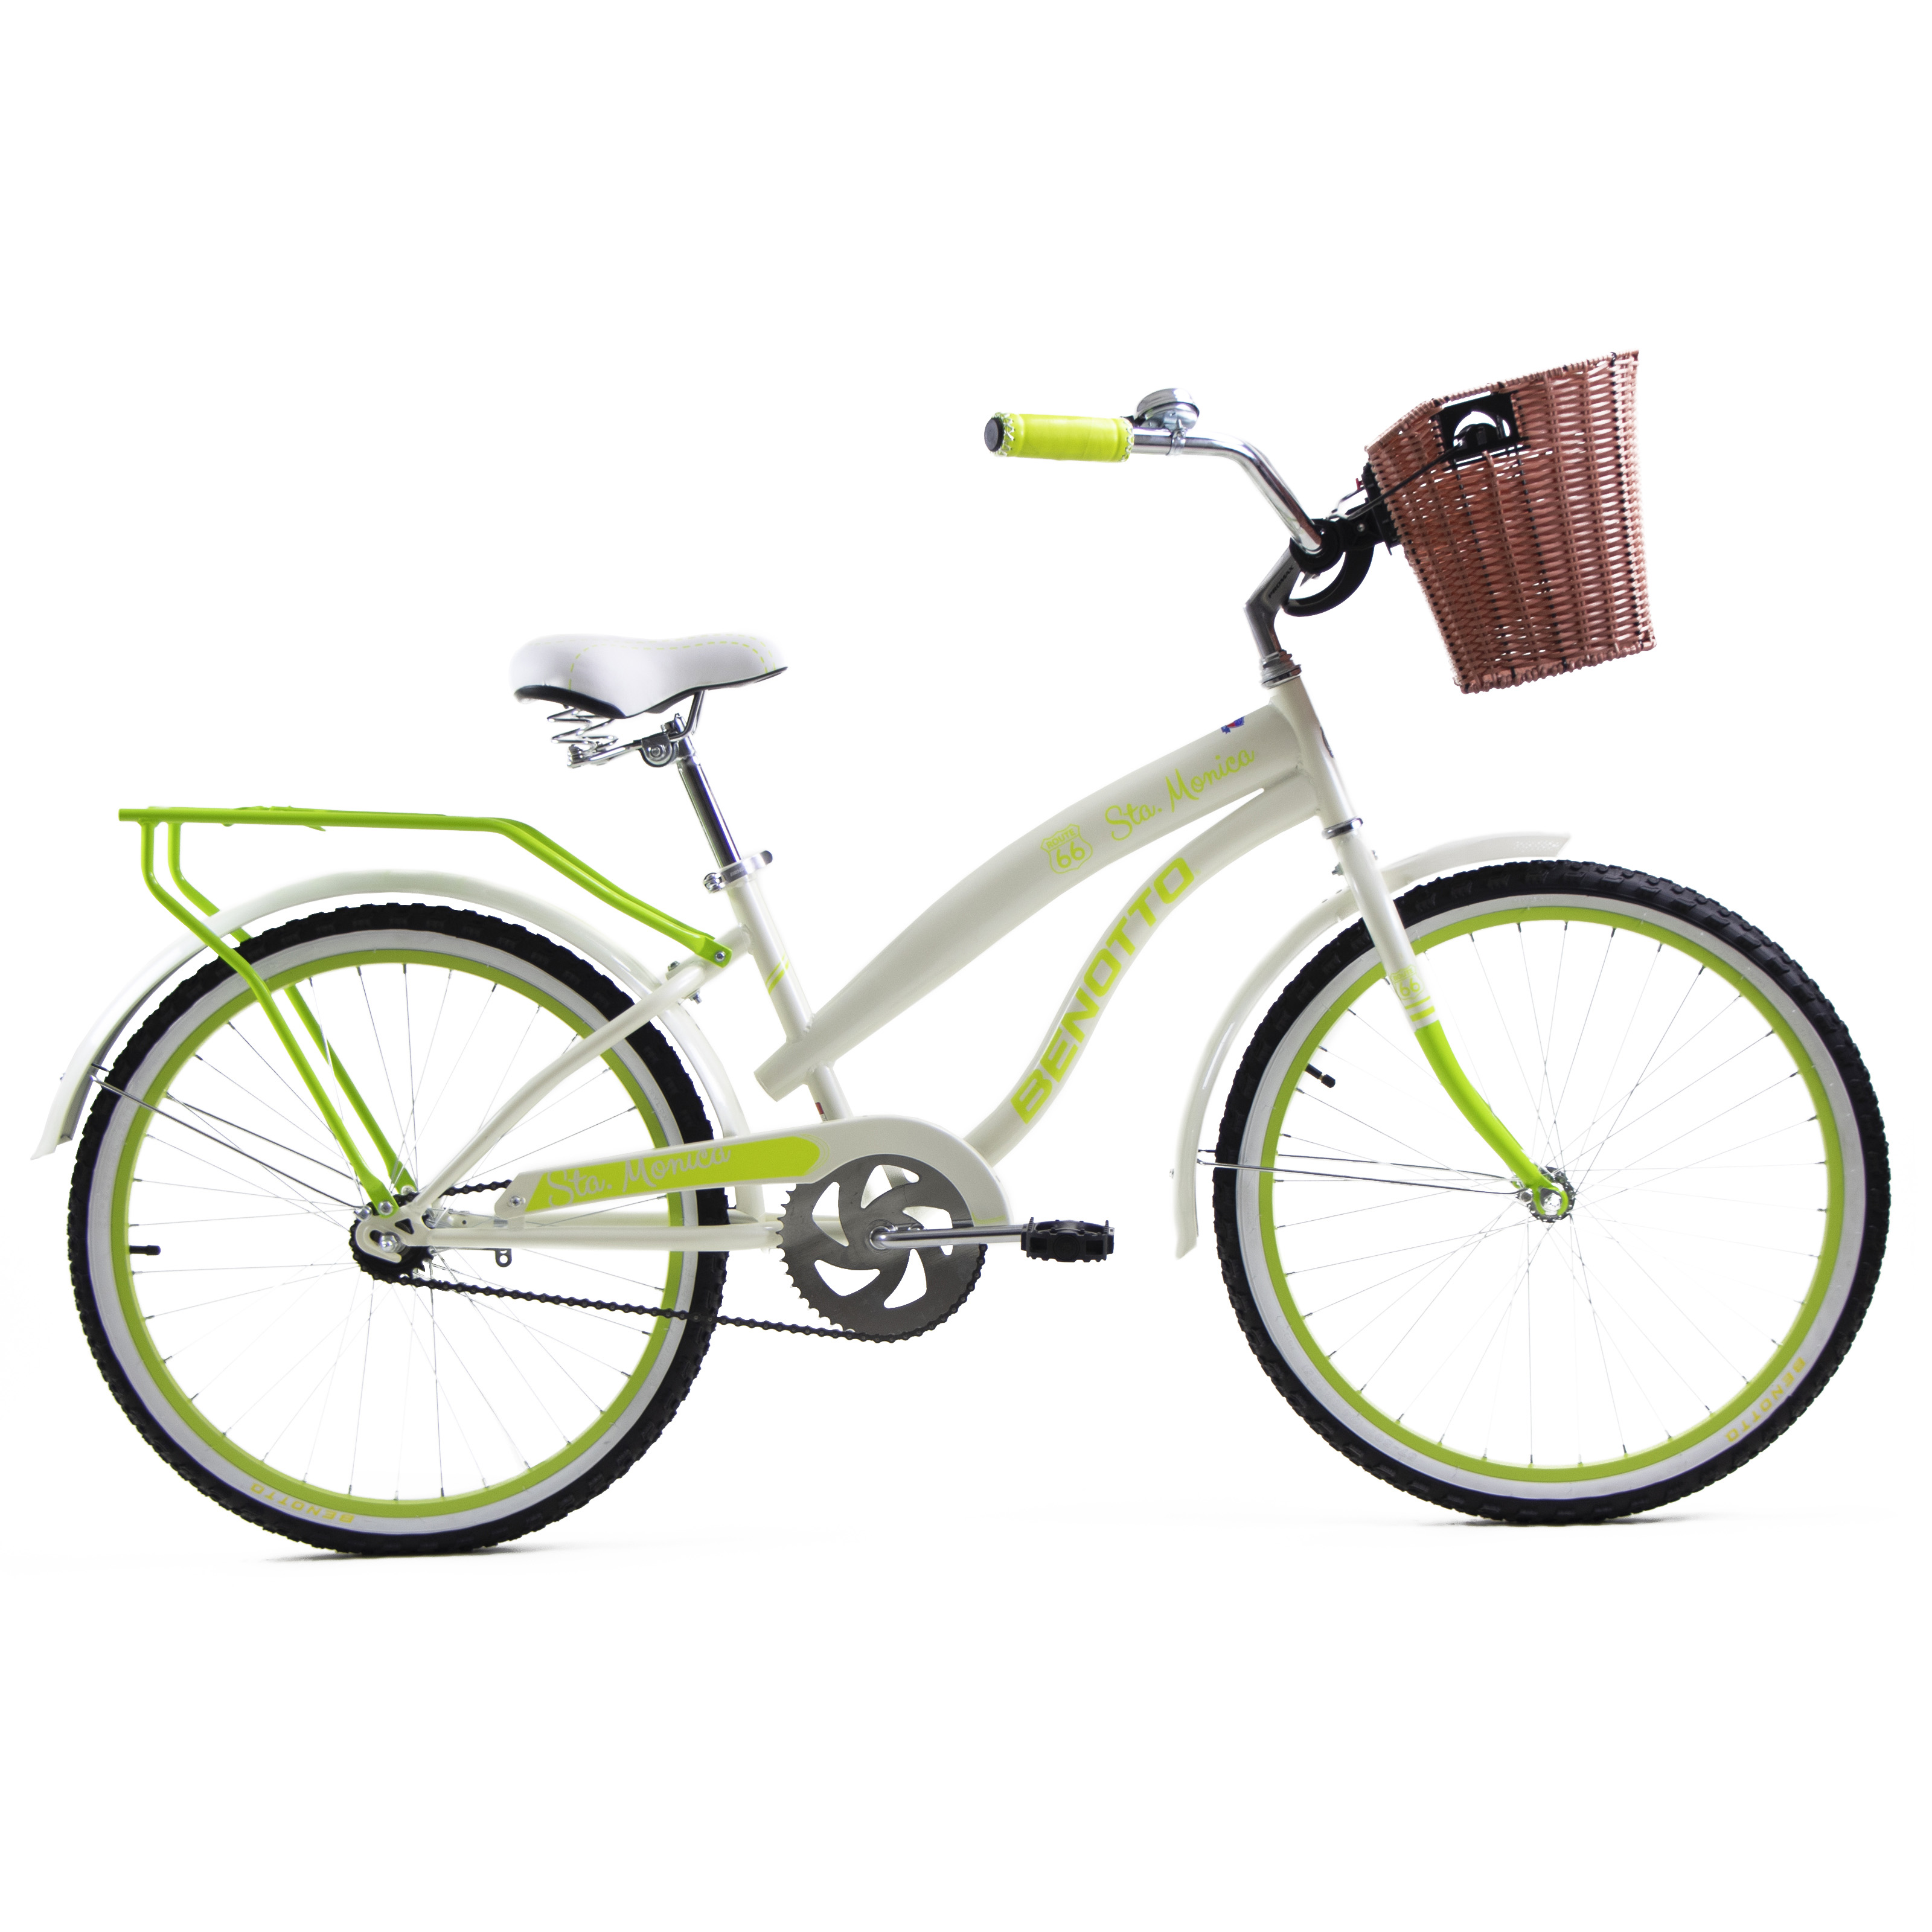 Bicicleta BENOTTO City STA. MONICA R24 1V. Mujer Frenos Contrapedal con Canastilla Acero Crema/Verde Claro Talla:UN